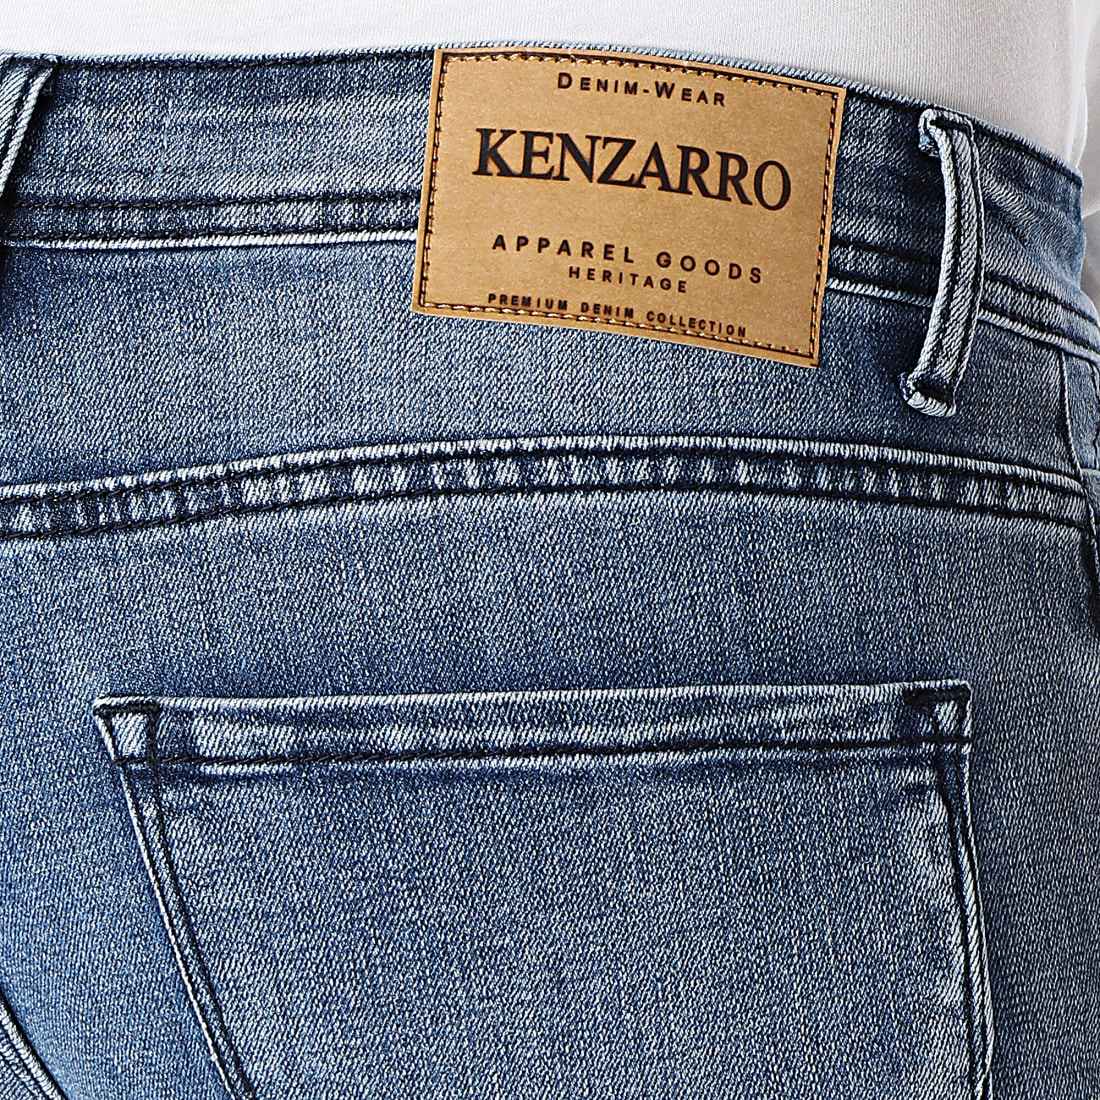 Kenzarro - Jeans bleu skinny homme fashion